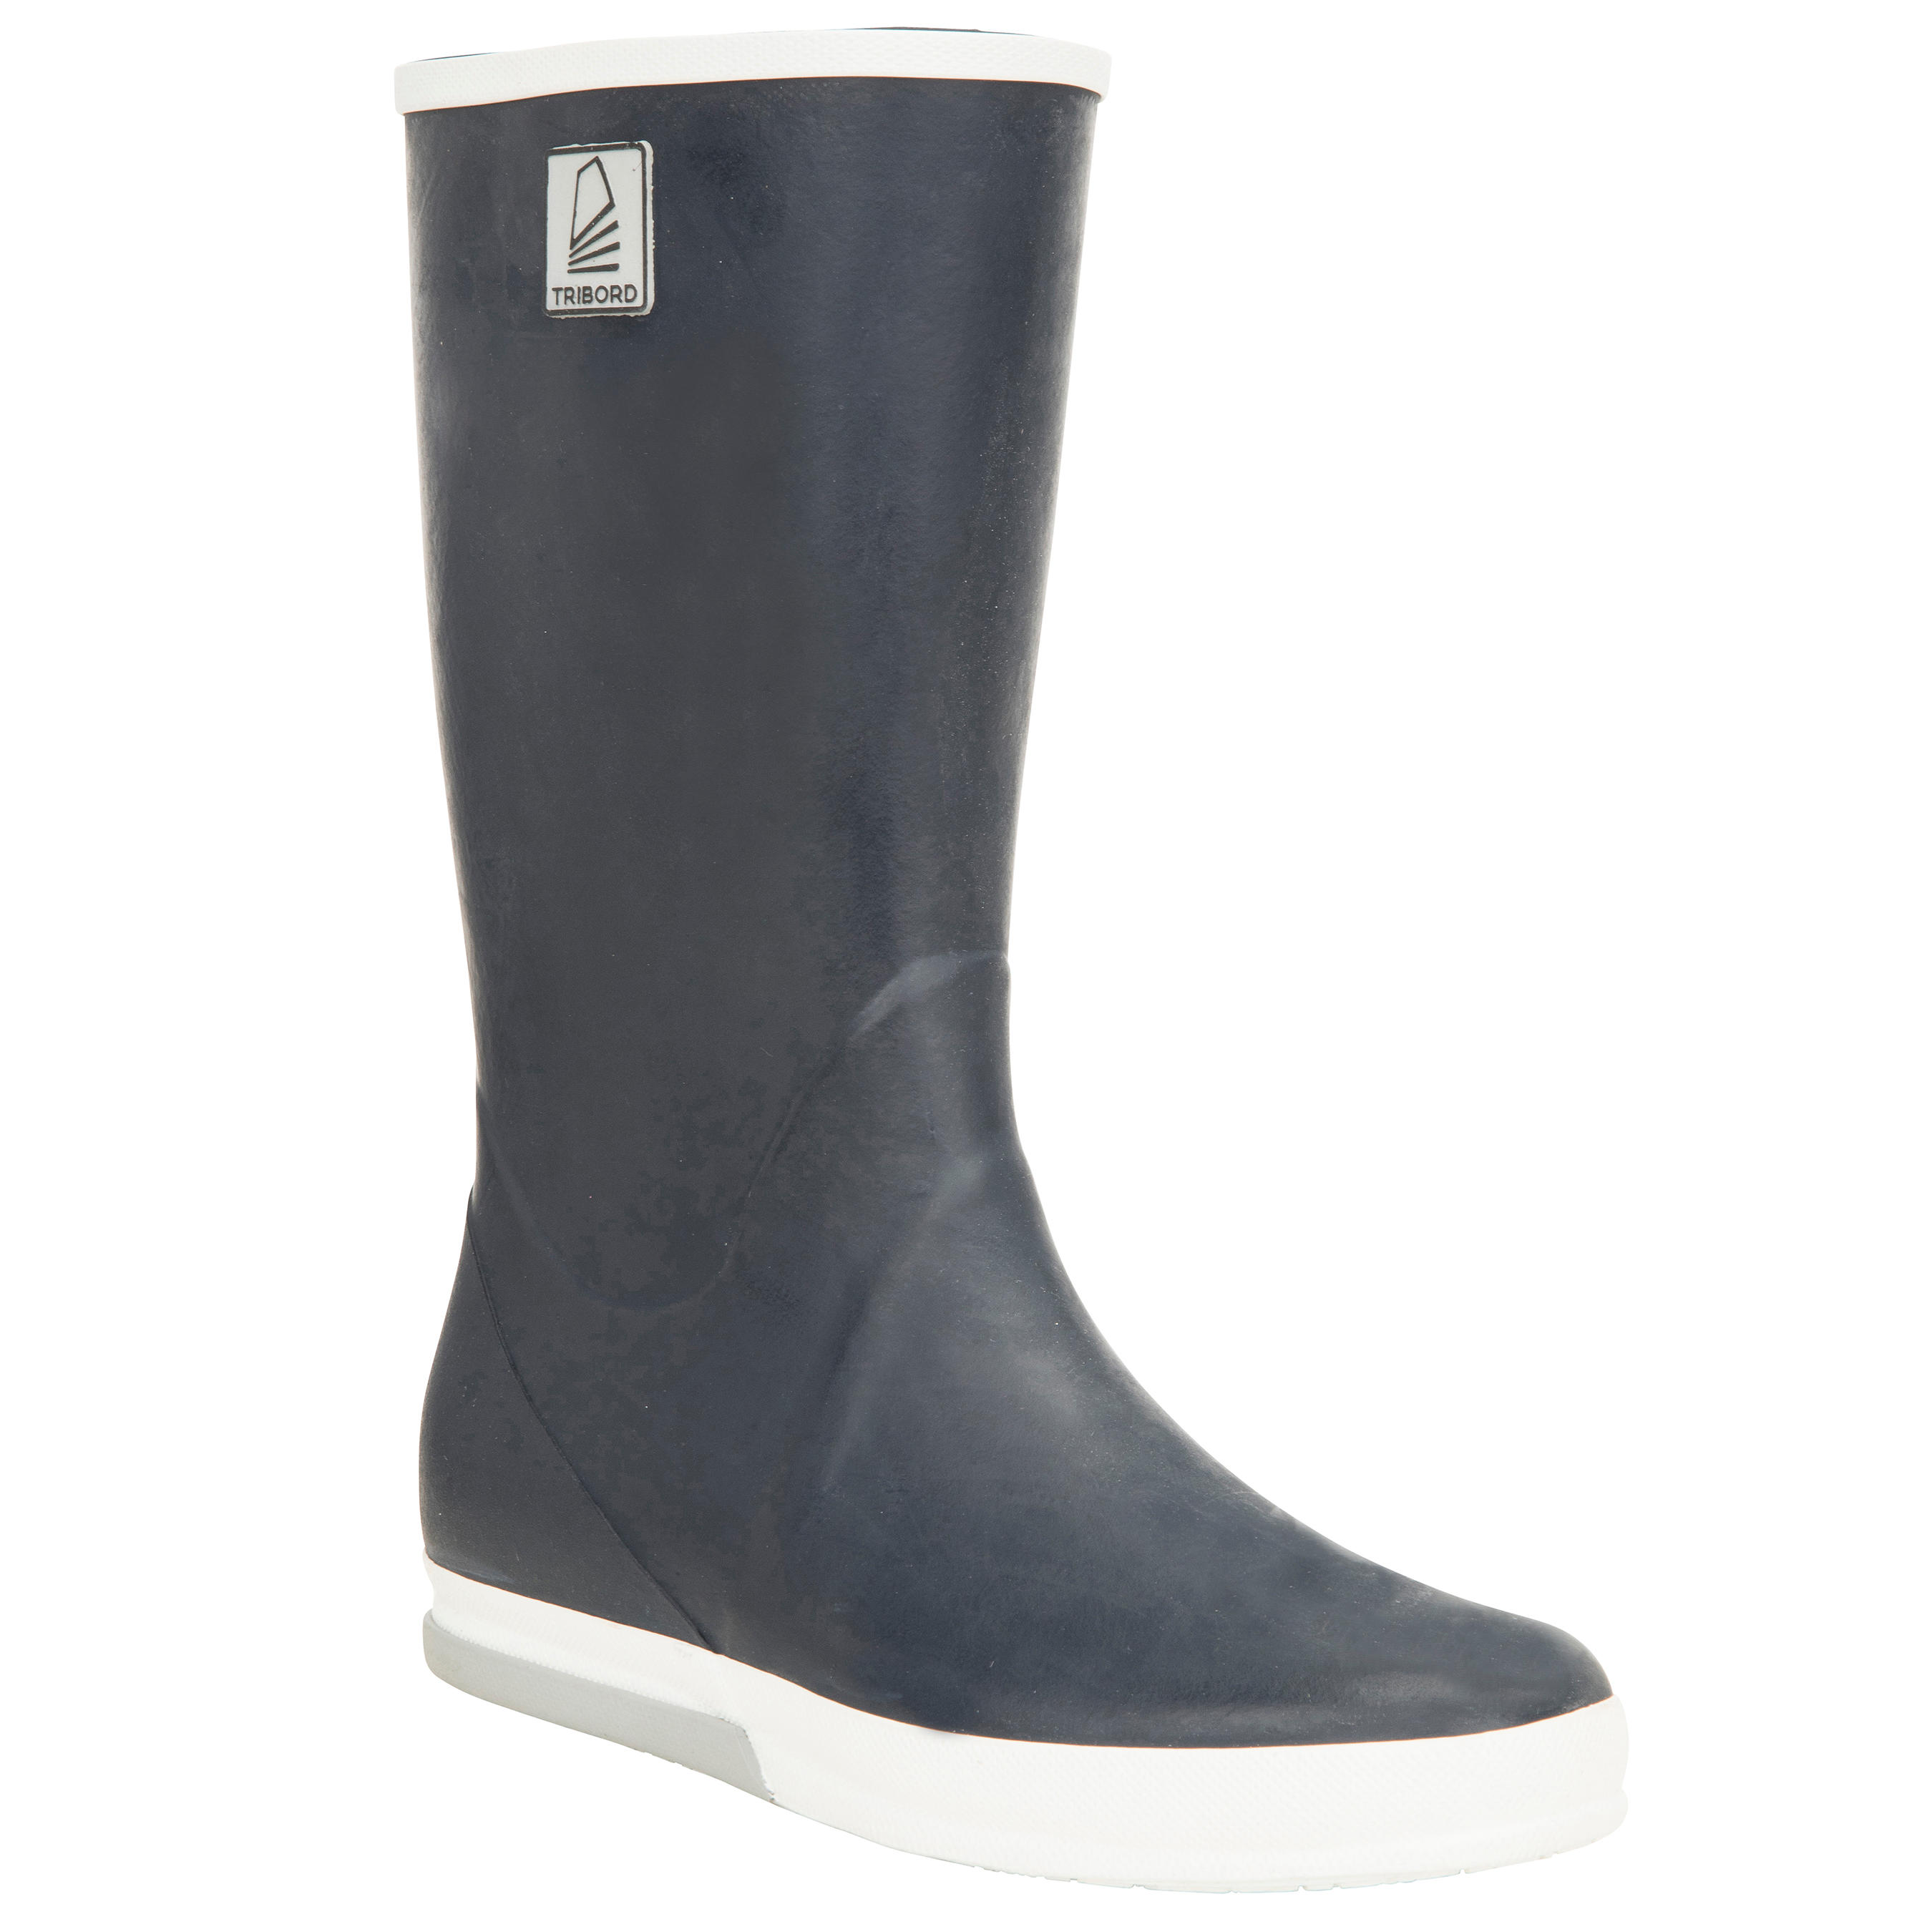 B500 Adult Sailing Boots - Blue / Grey 1/4